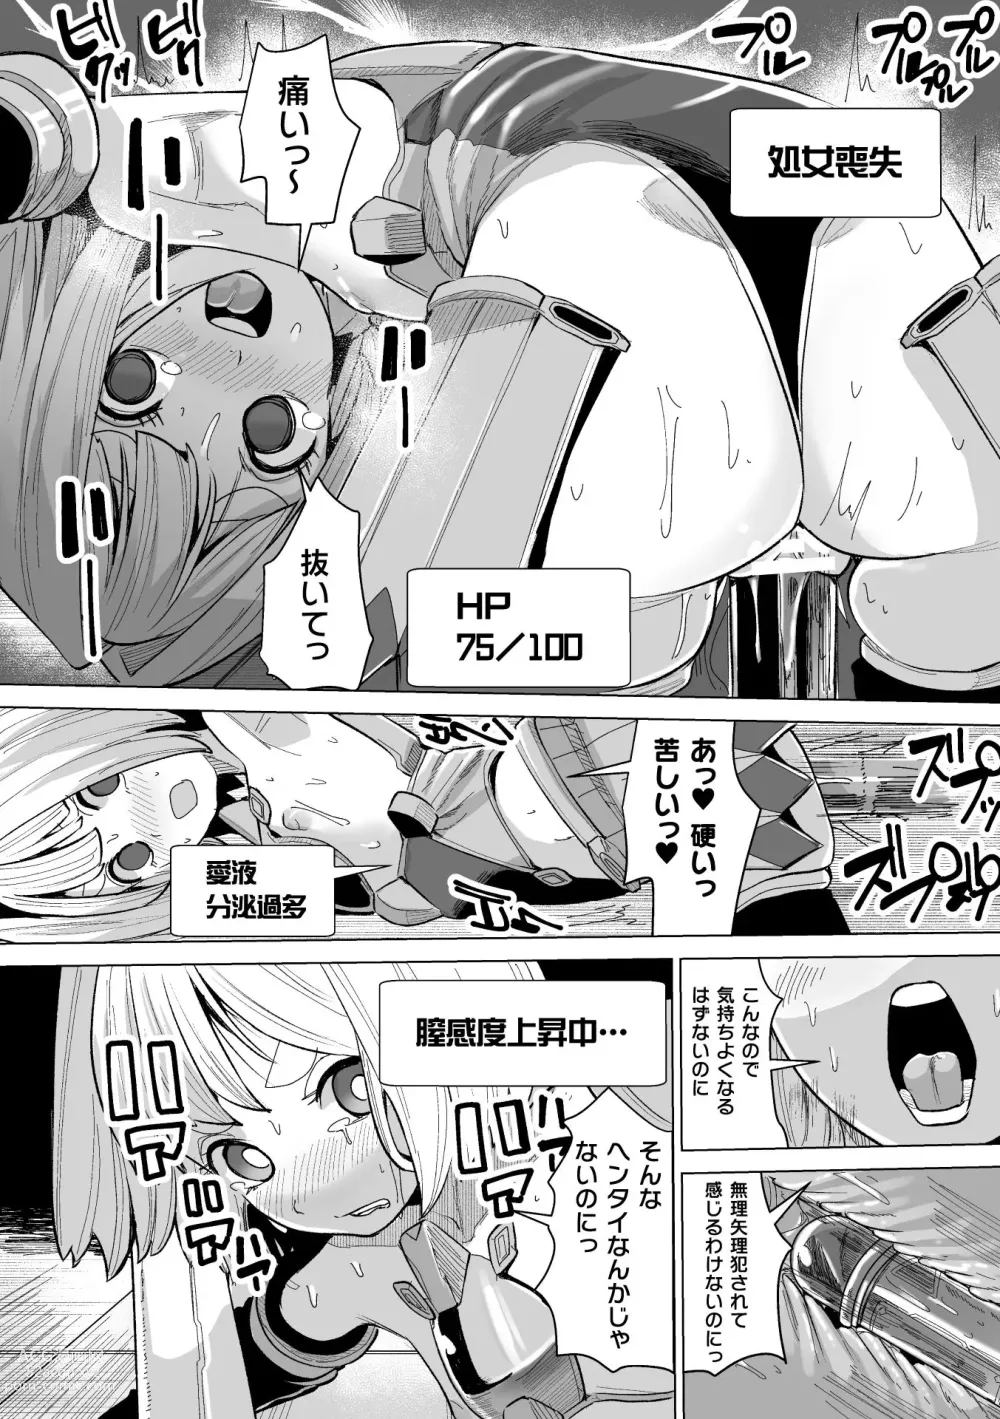 Page 16 of manga Mesugaki mitchiri ecchi